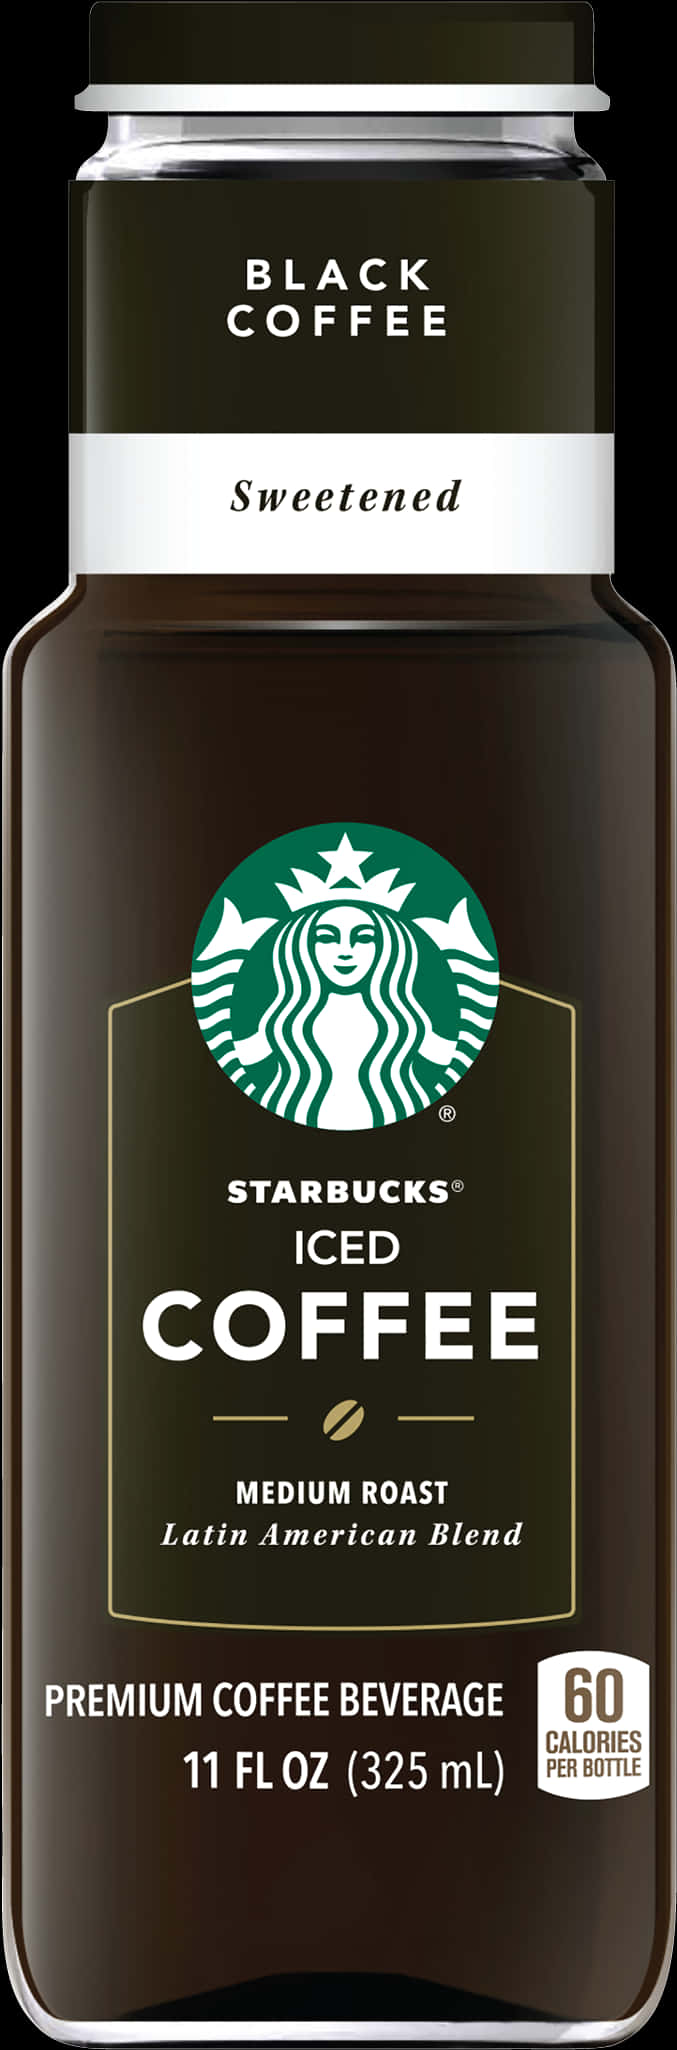 Starbucks Sweetened Black Iced Coffee Bottle PNG